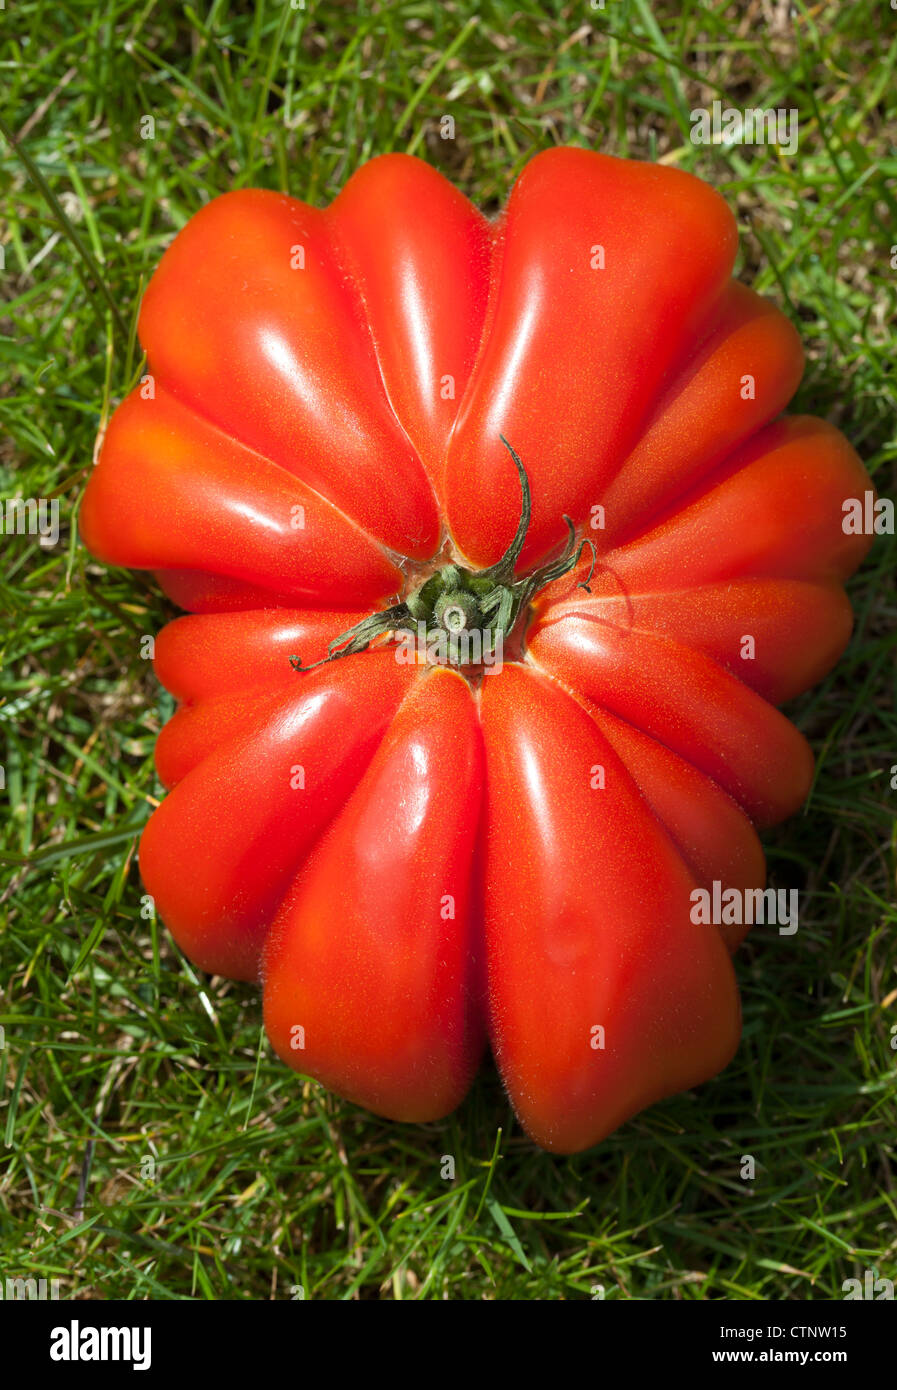 Giant Beef Tomato (Zapotec Pleated) Stock Photo